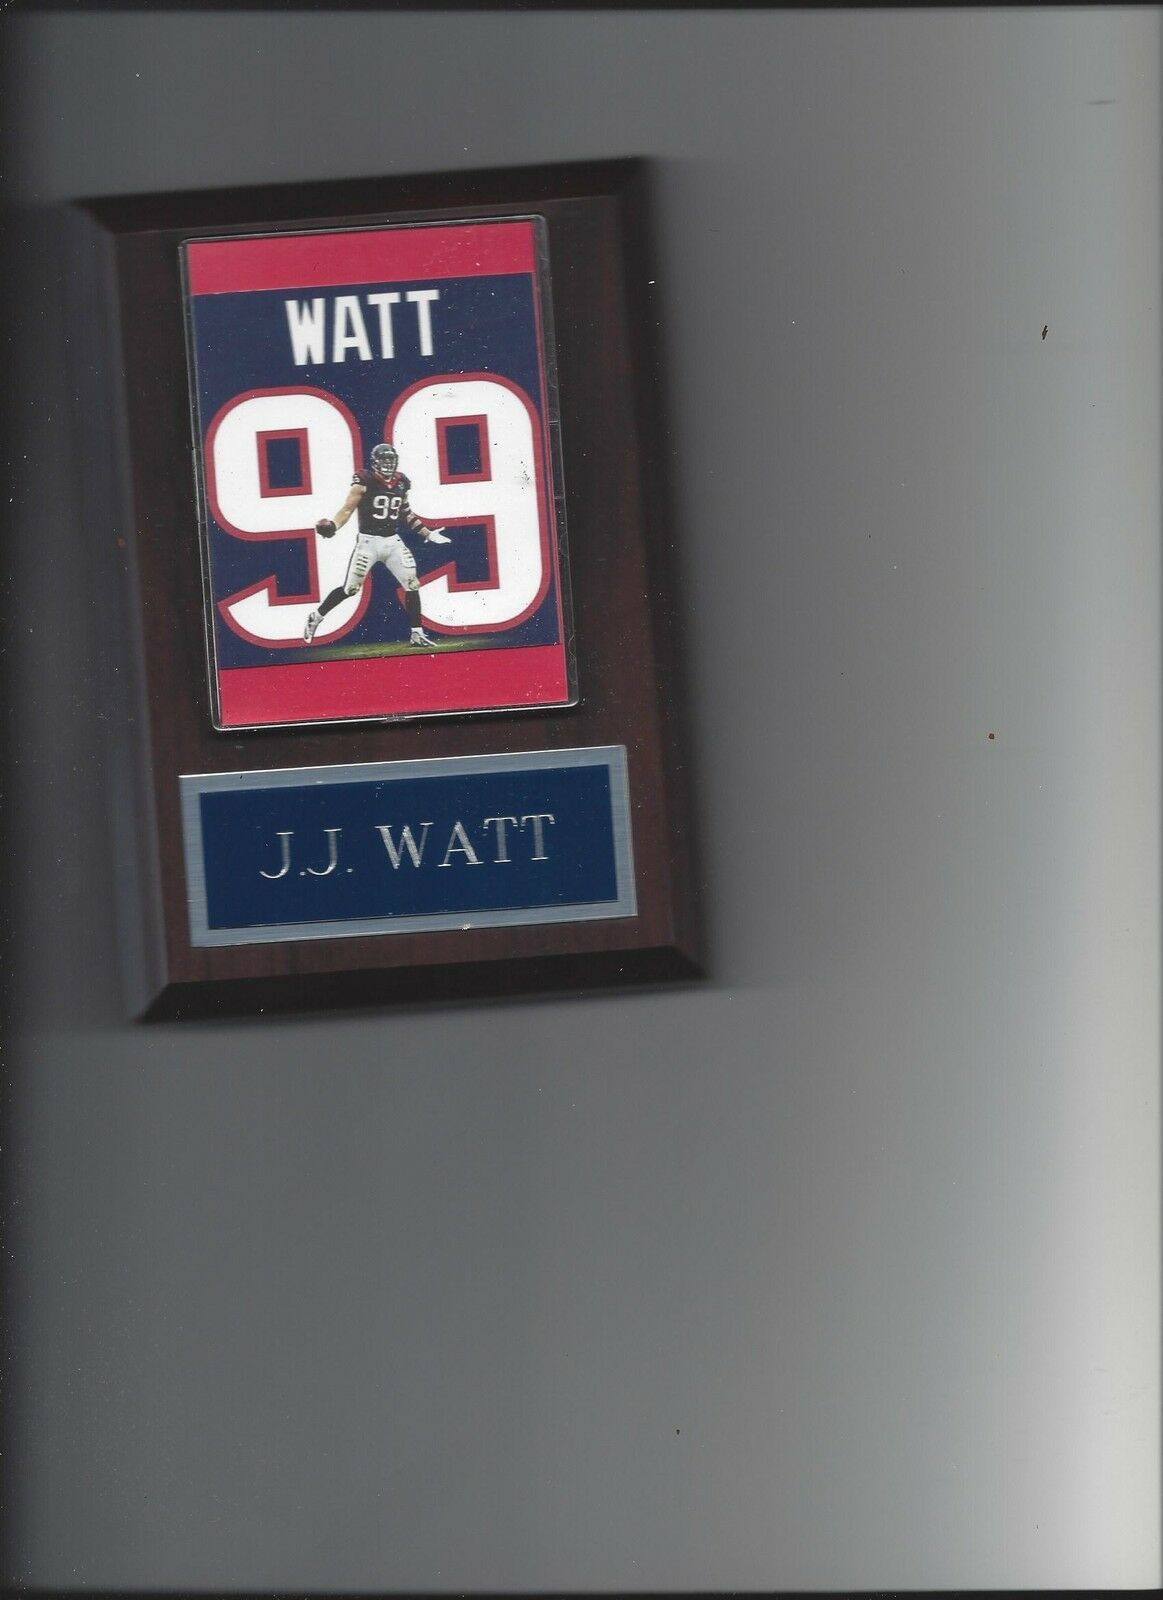 J.J. WATT JERSEY PLAQUE HOUSTON TEXANS FOOTBALL NFL - $4.94